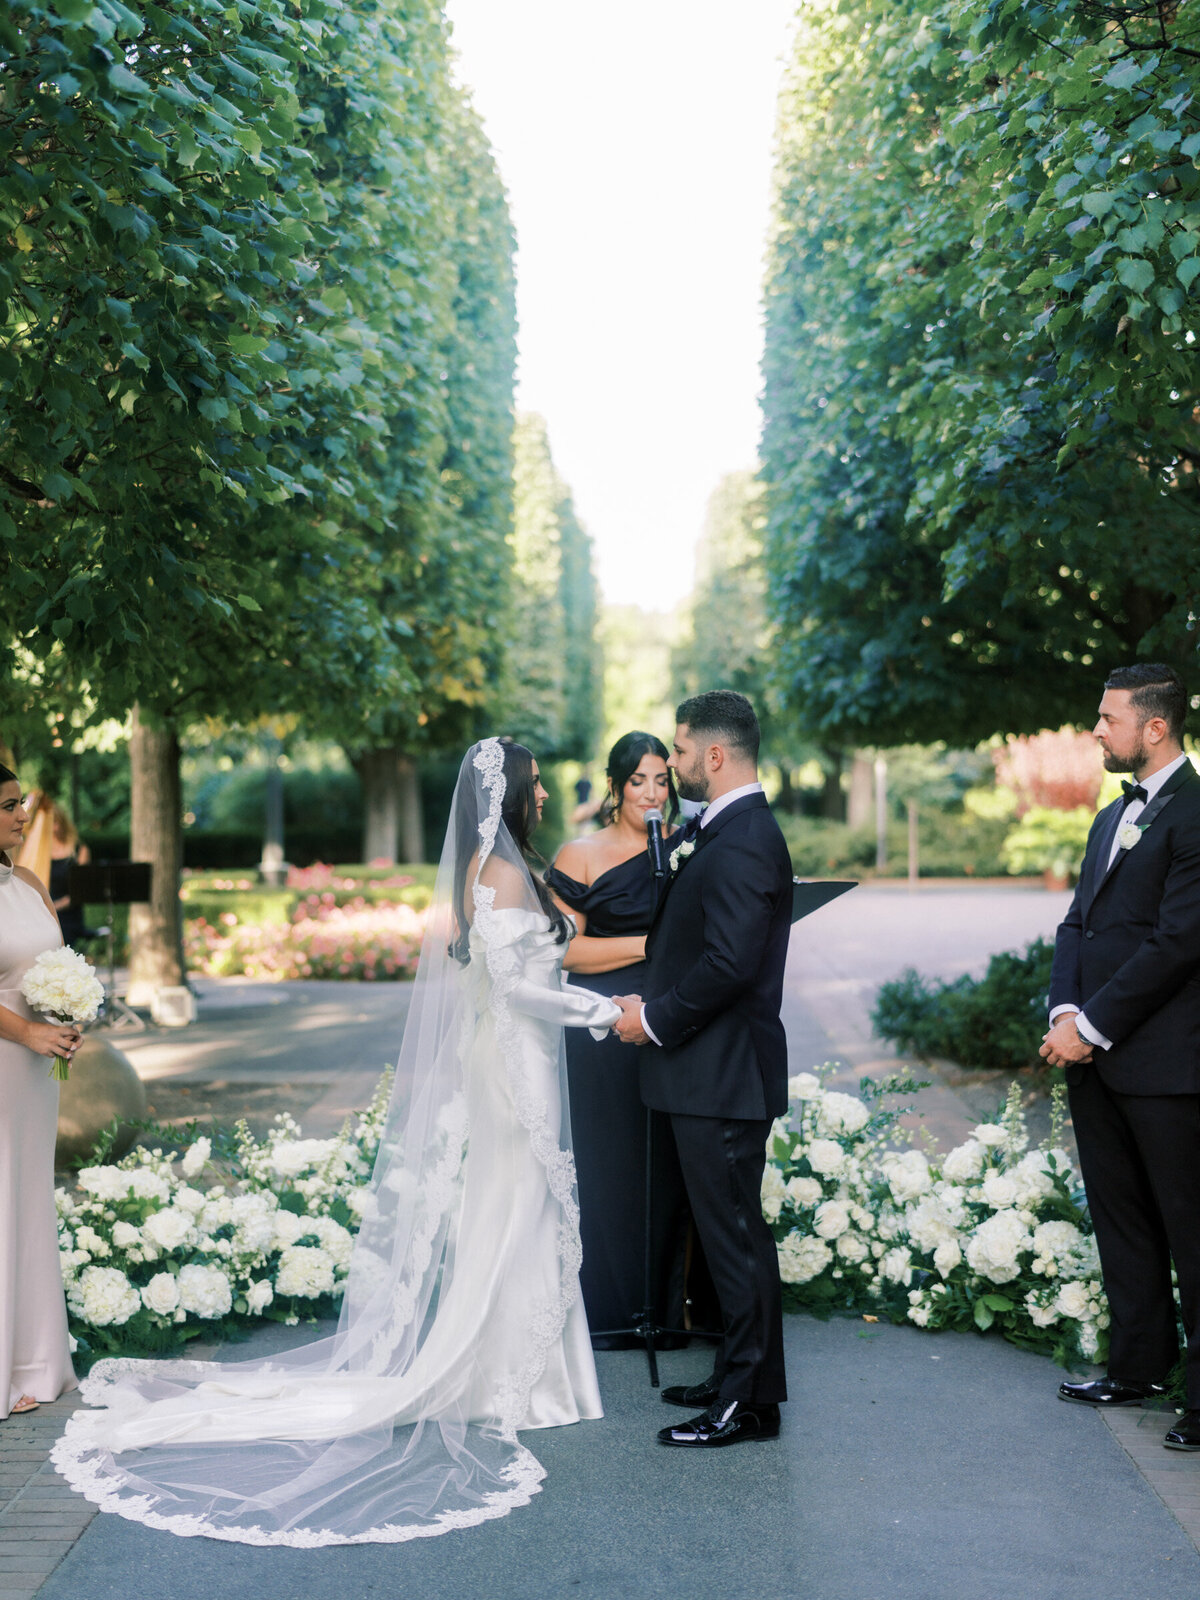 Summer Chicago Botanic Gardens Wedding Highlights | Amarachi Ikeji Photography 100